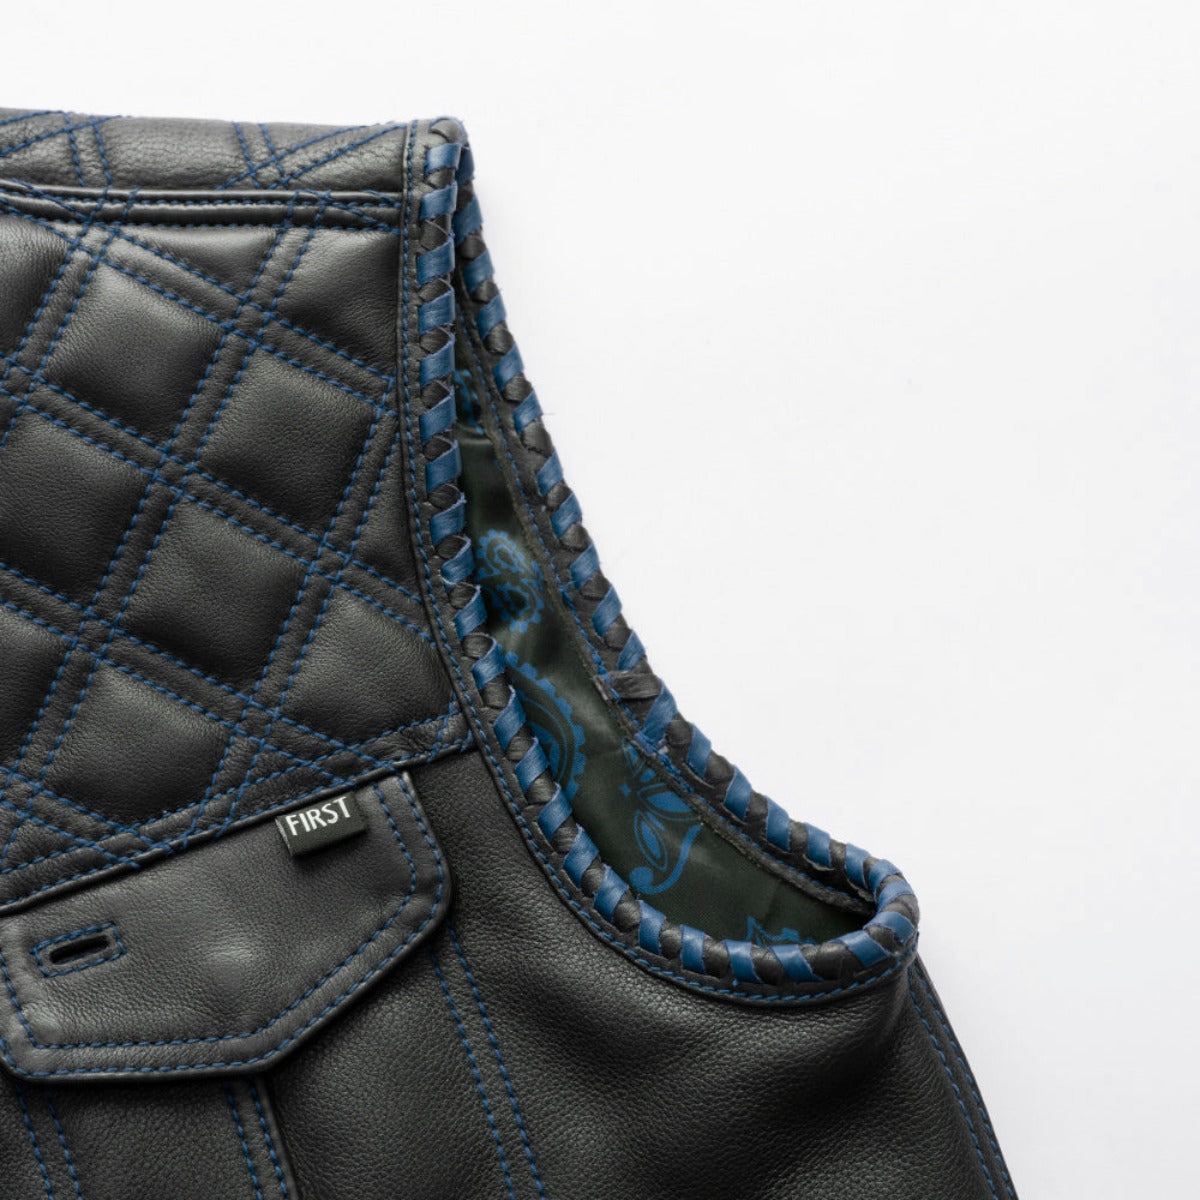 First Manufacturing Sinister - Men's Motorcycle Leather Vest, Black/Blue